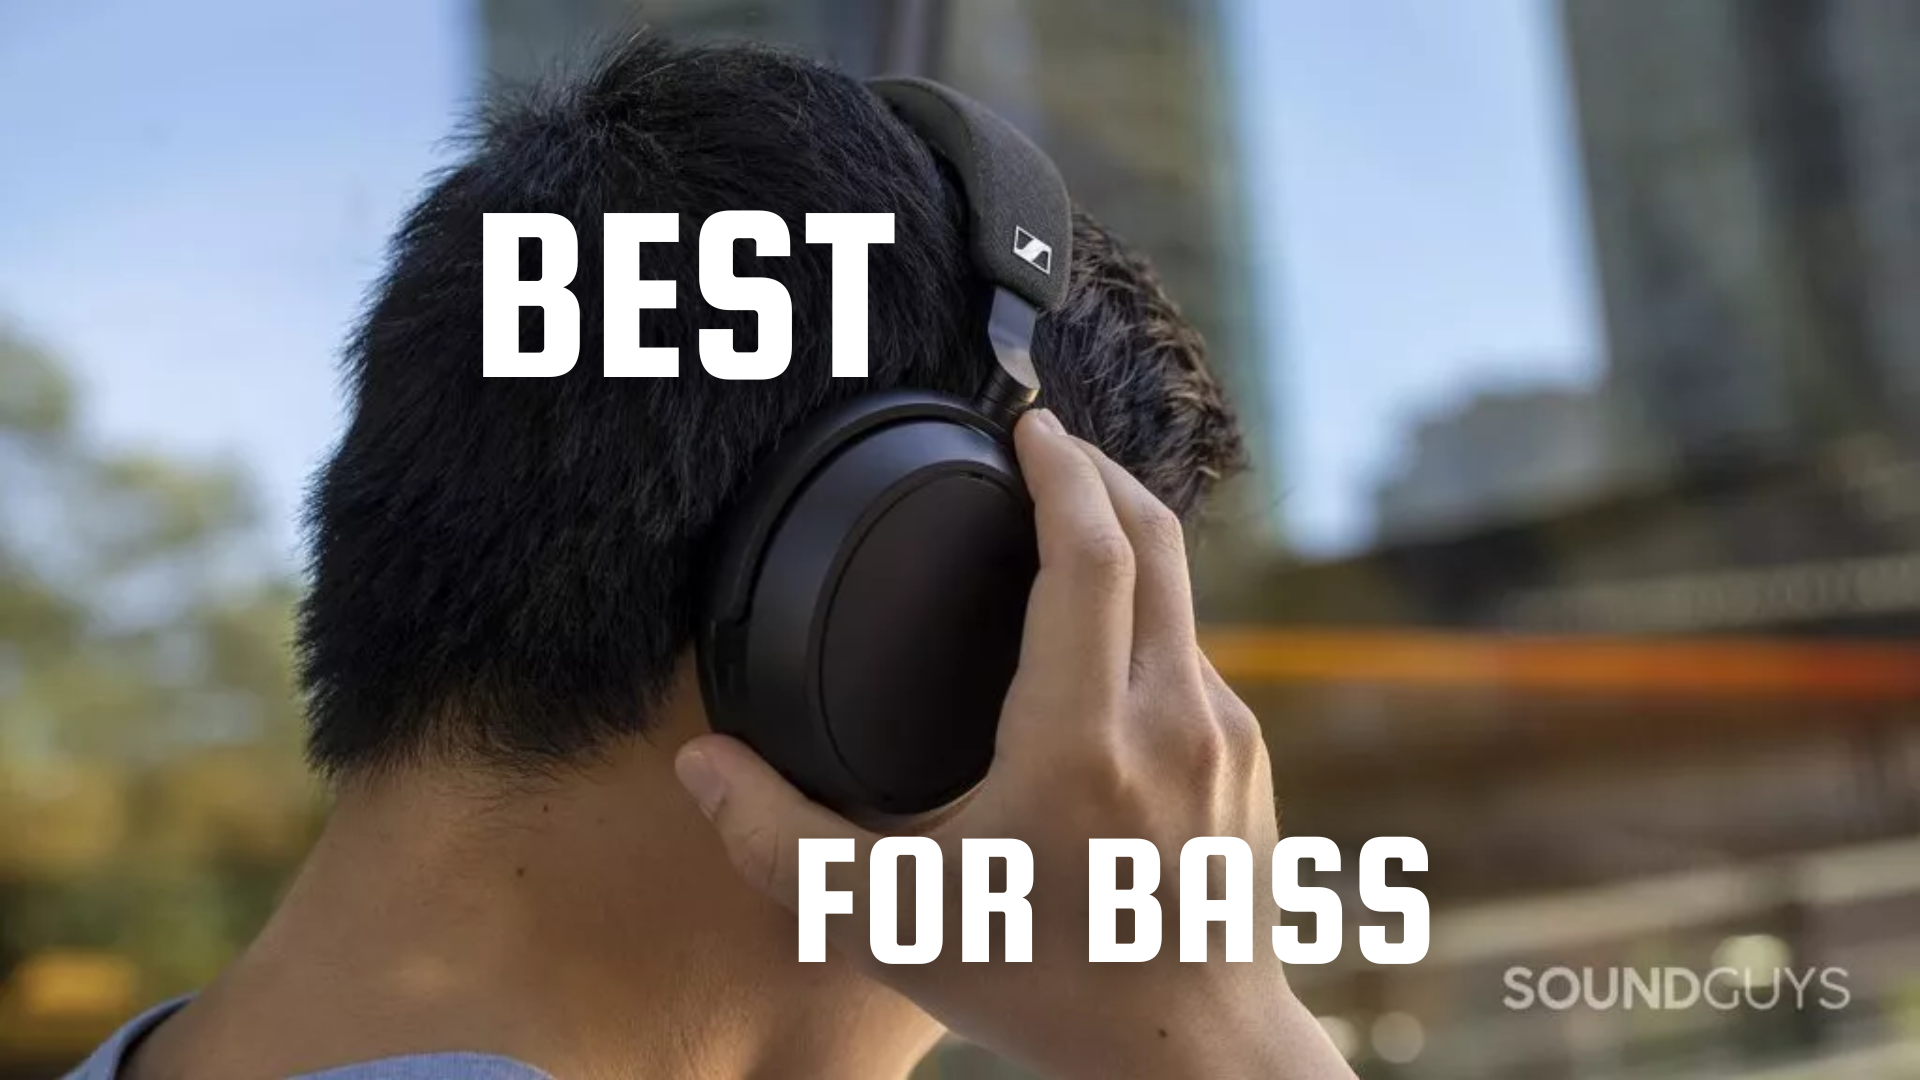 Best headphones for bass